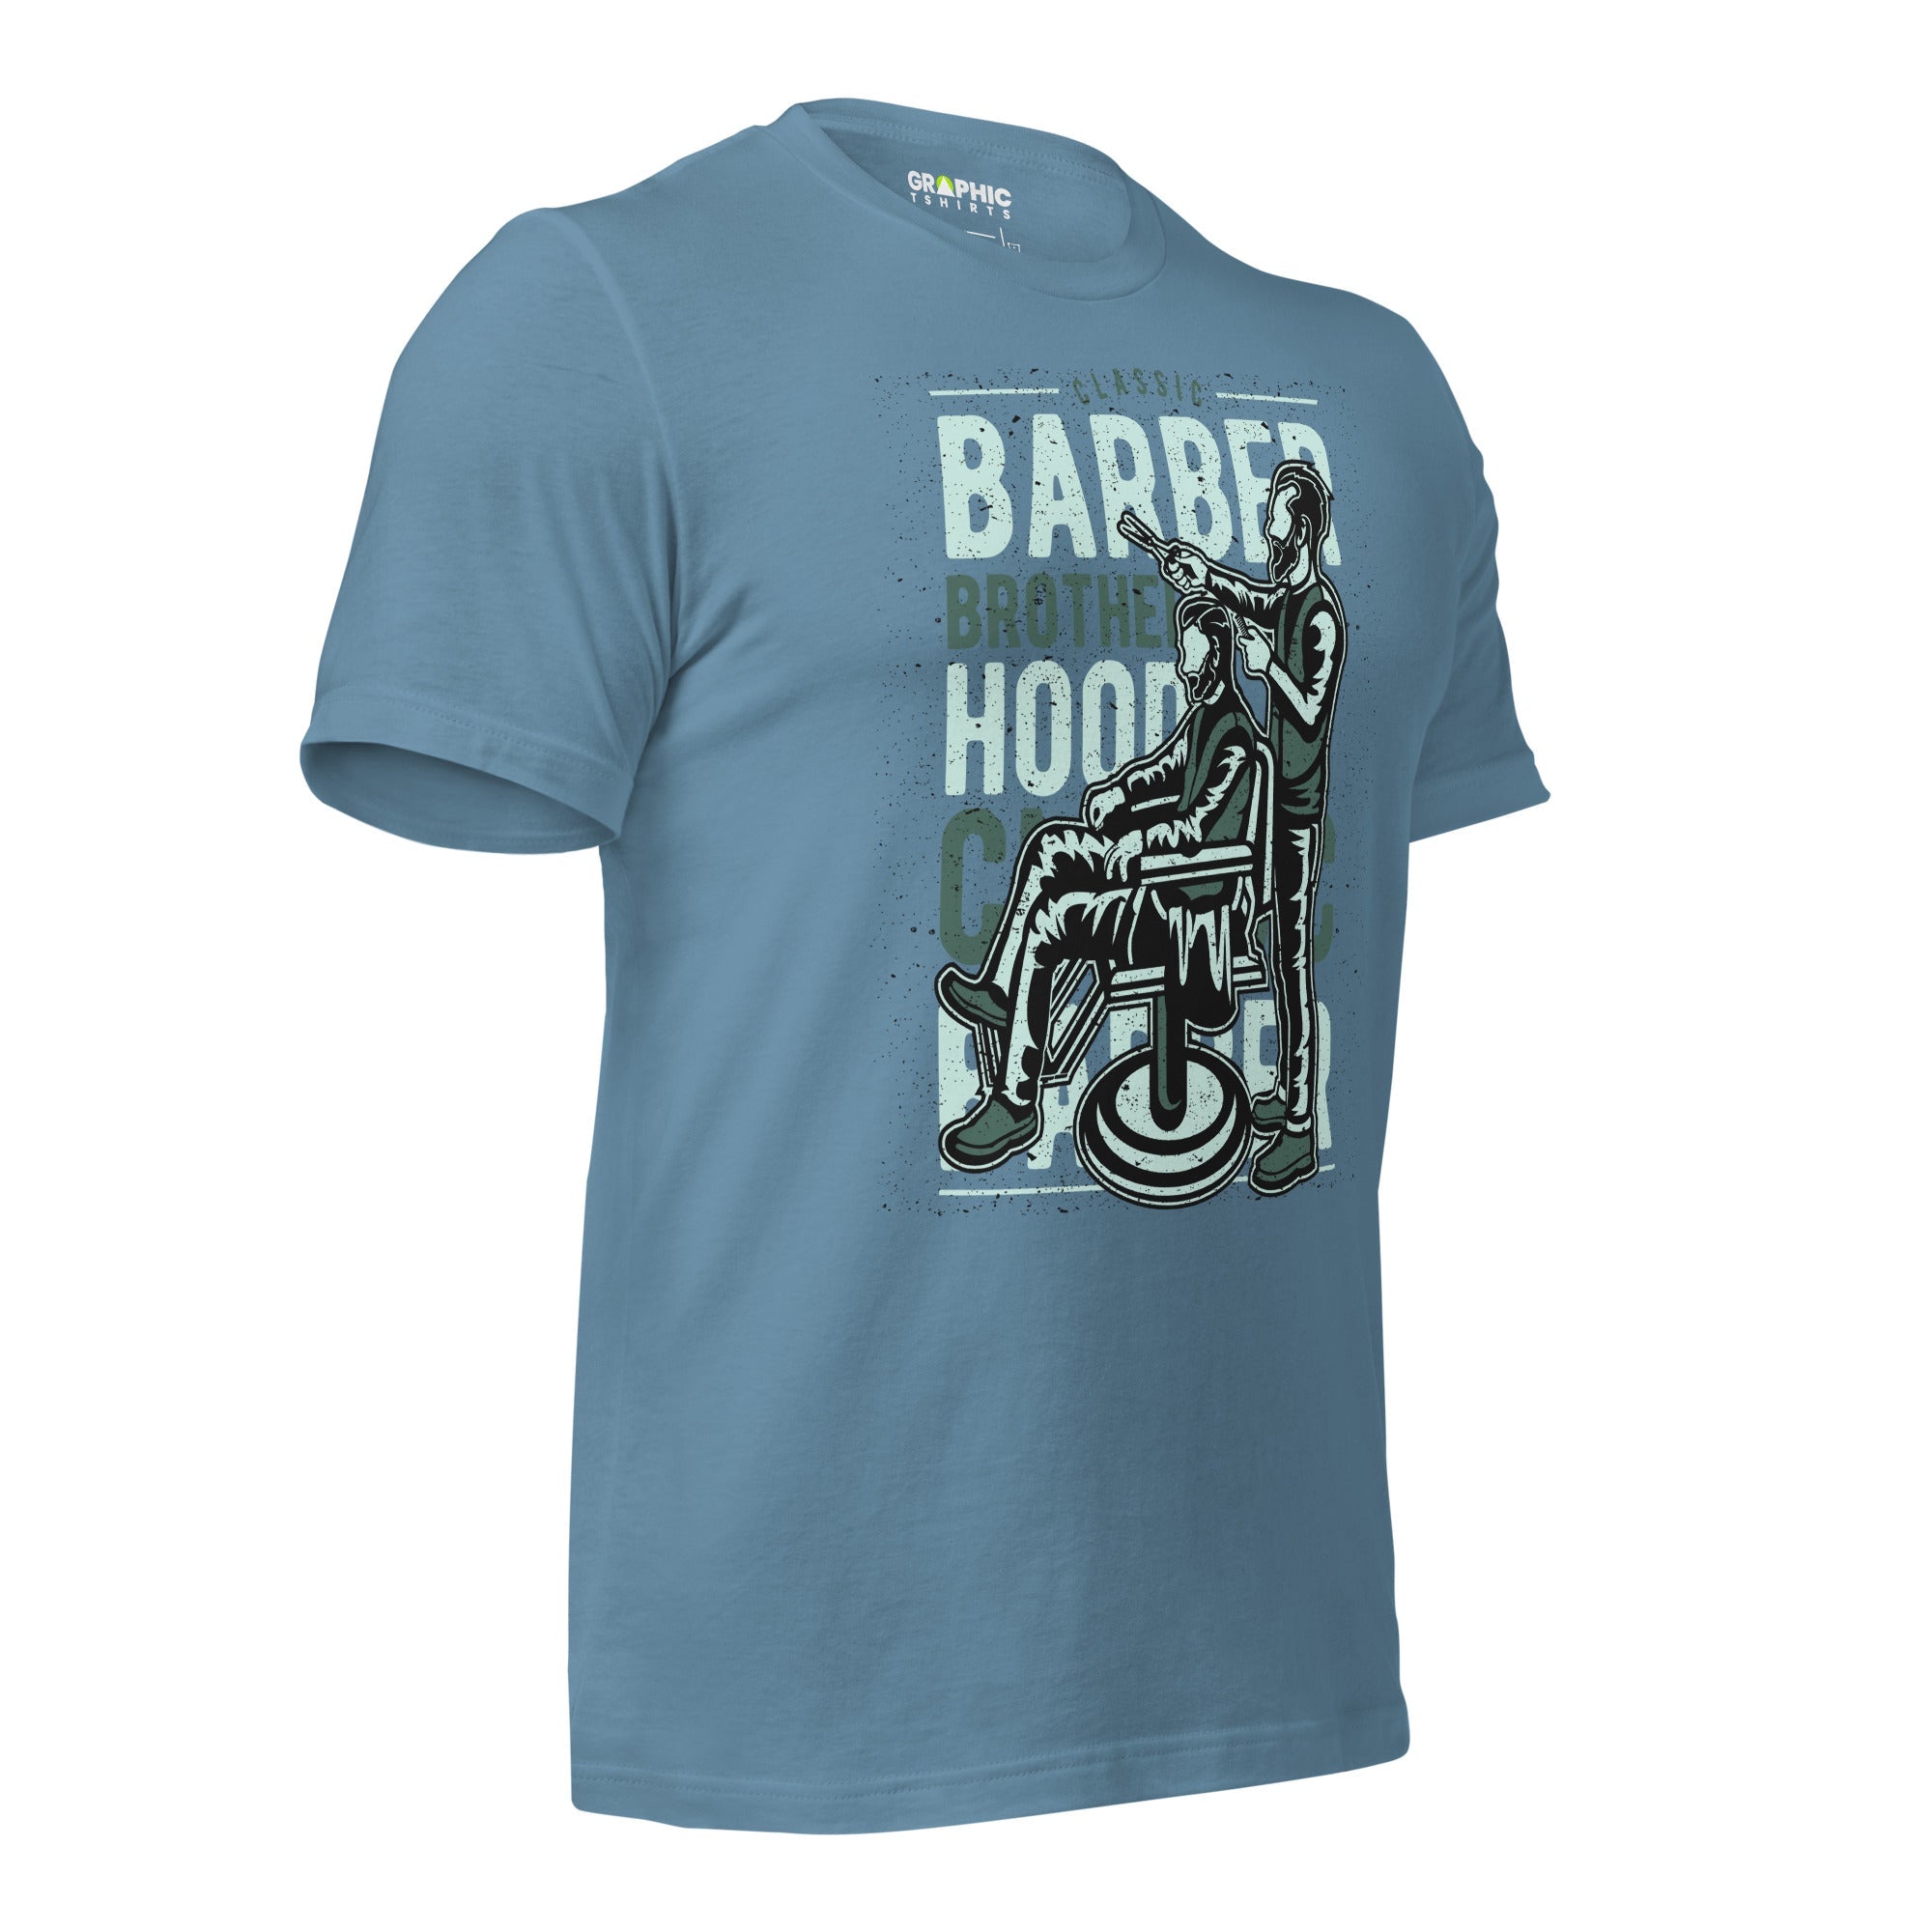 Unisex Staple T-Shirt - Classic Barber Brotherhood - GRAPHIC T-SHIRTS